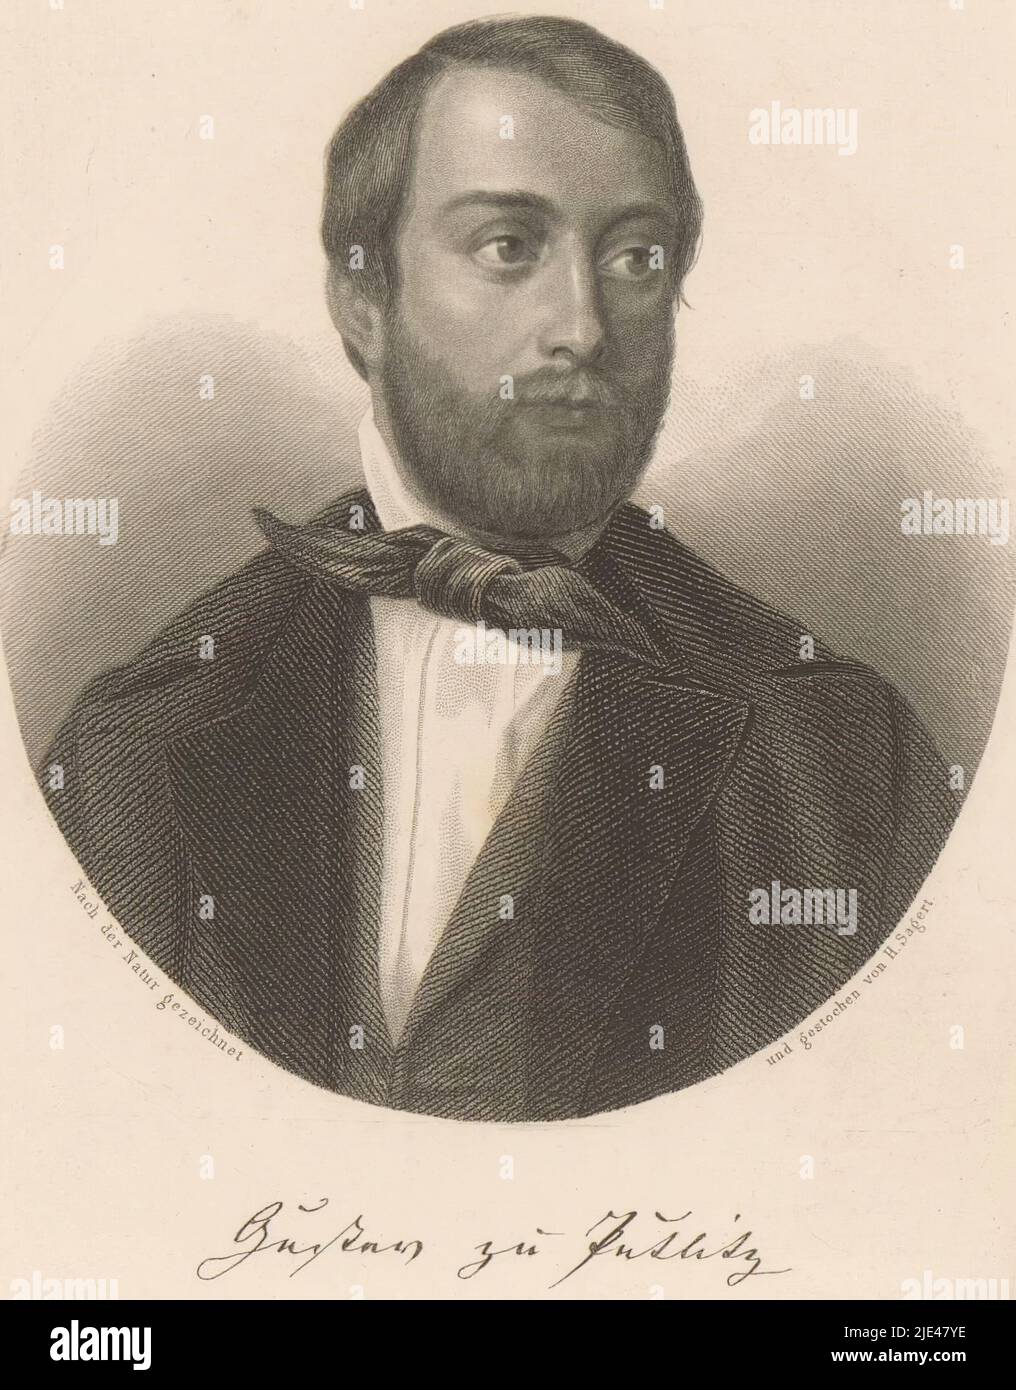 Portrait of Gustav Gans zu Putlitz, Hermann Sagert, 1832 - 1889, print maker: Hermann Sagert, (mentioned on object), printer: Heise, (mentioned on object), 1832 - 1889, paper, engraving, h 154 mm - w 129 mm Stock Photo